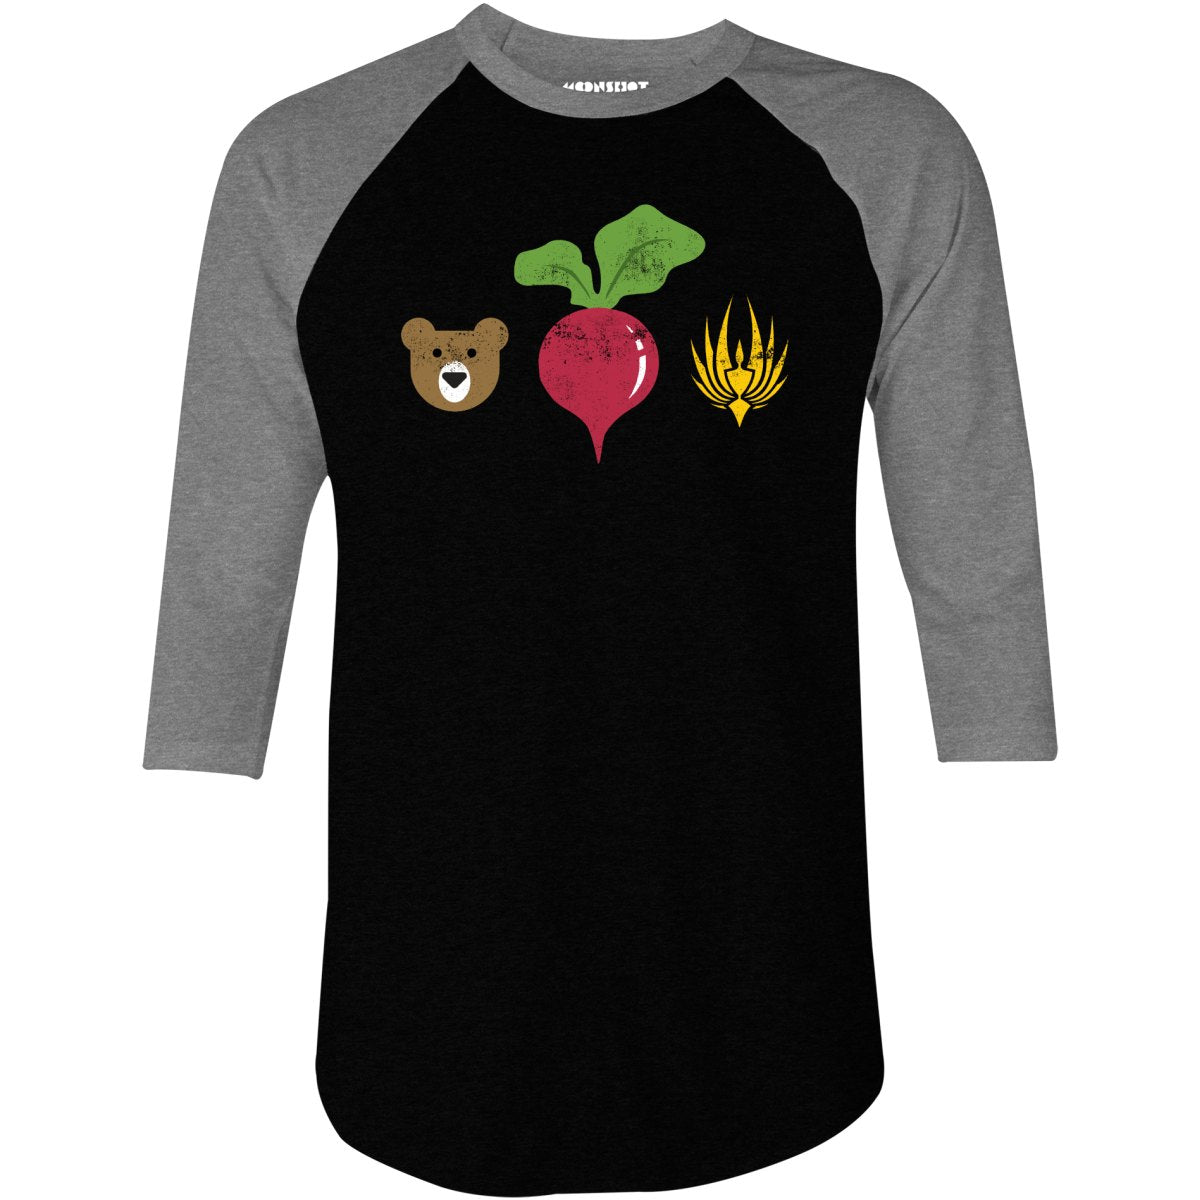 Bears Beets Battlestar Galactica - 3/4 Sleeve Raglan T-Shirt